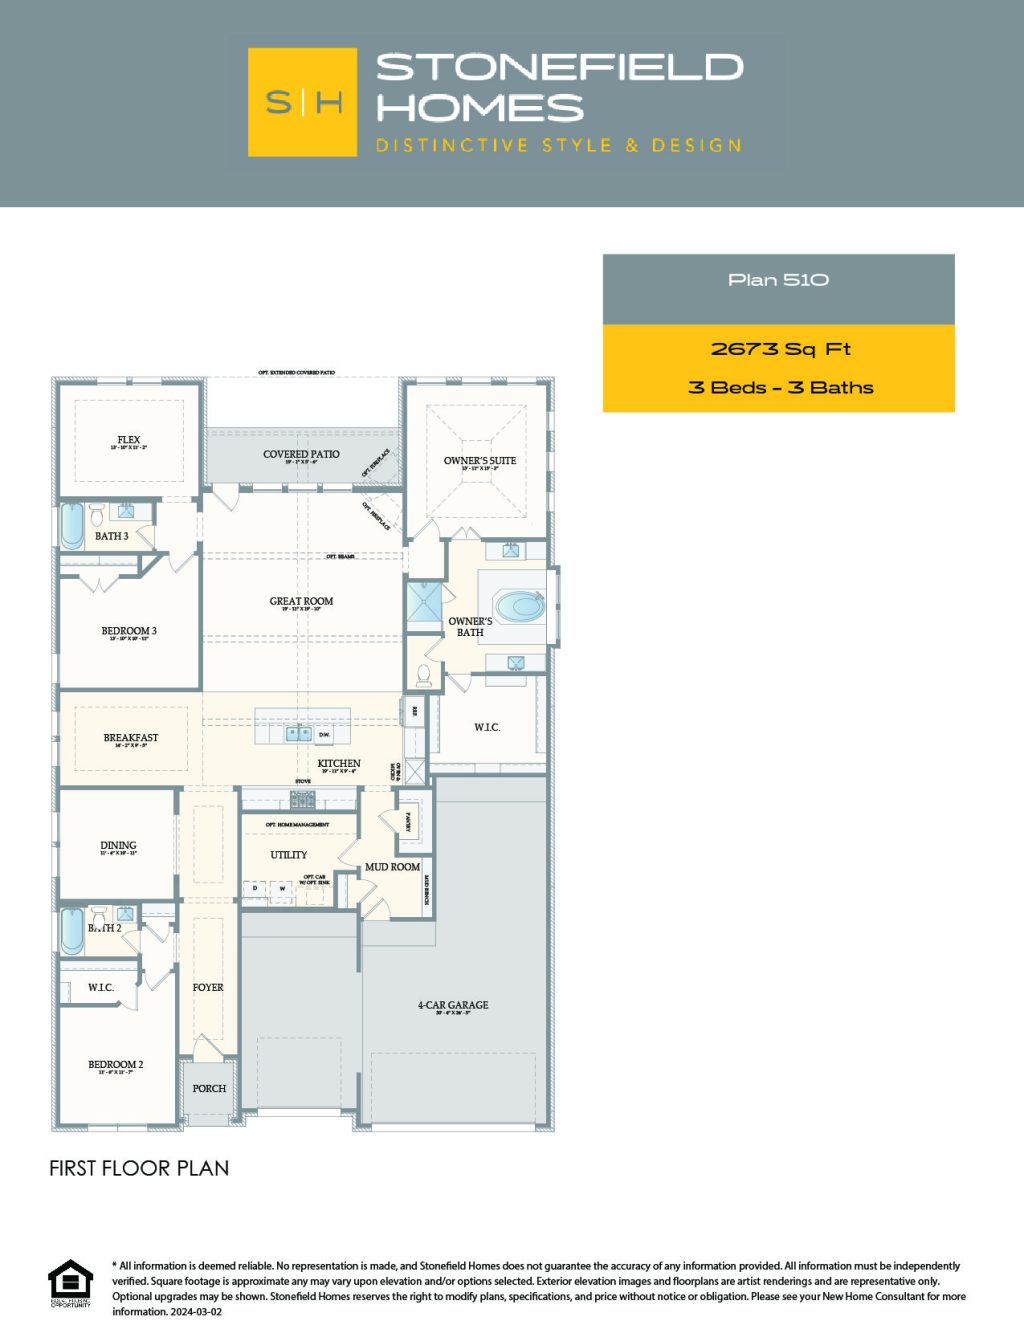 Bali Floor Plan - Single Story House Plans in Houston TX